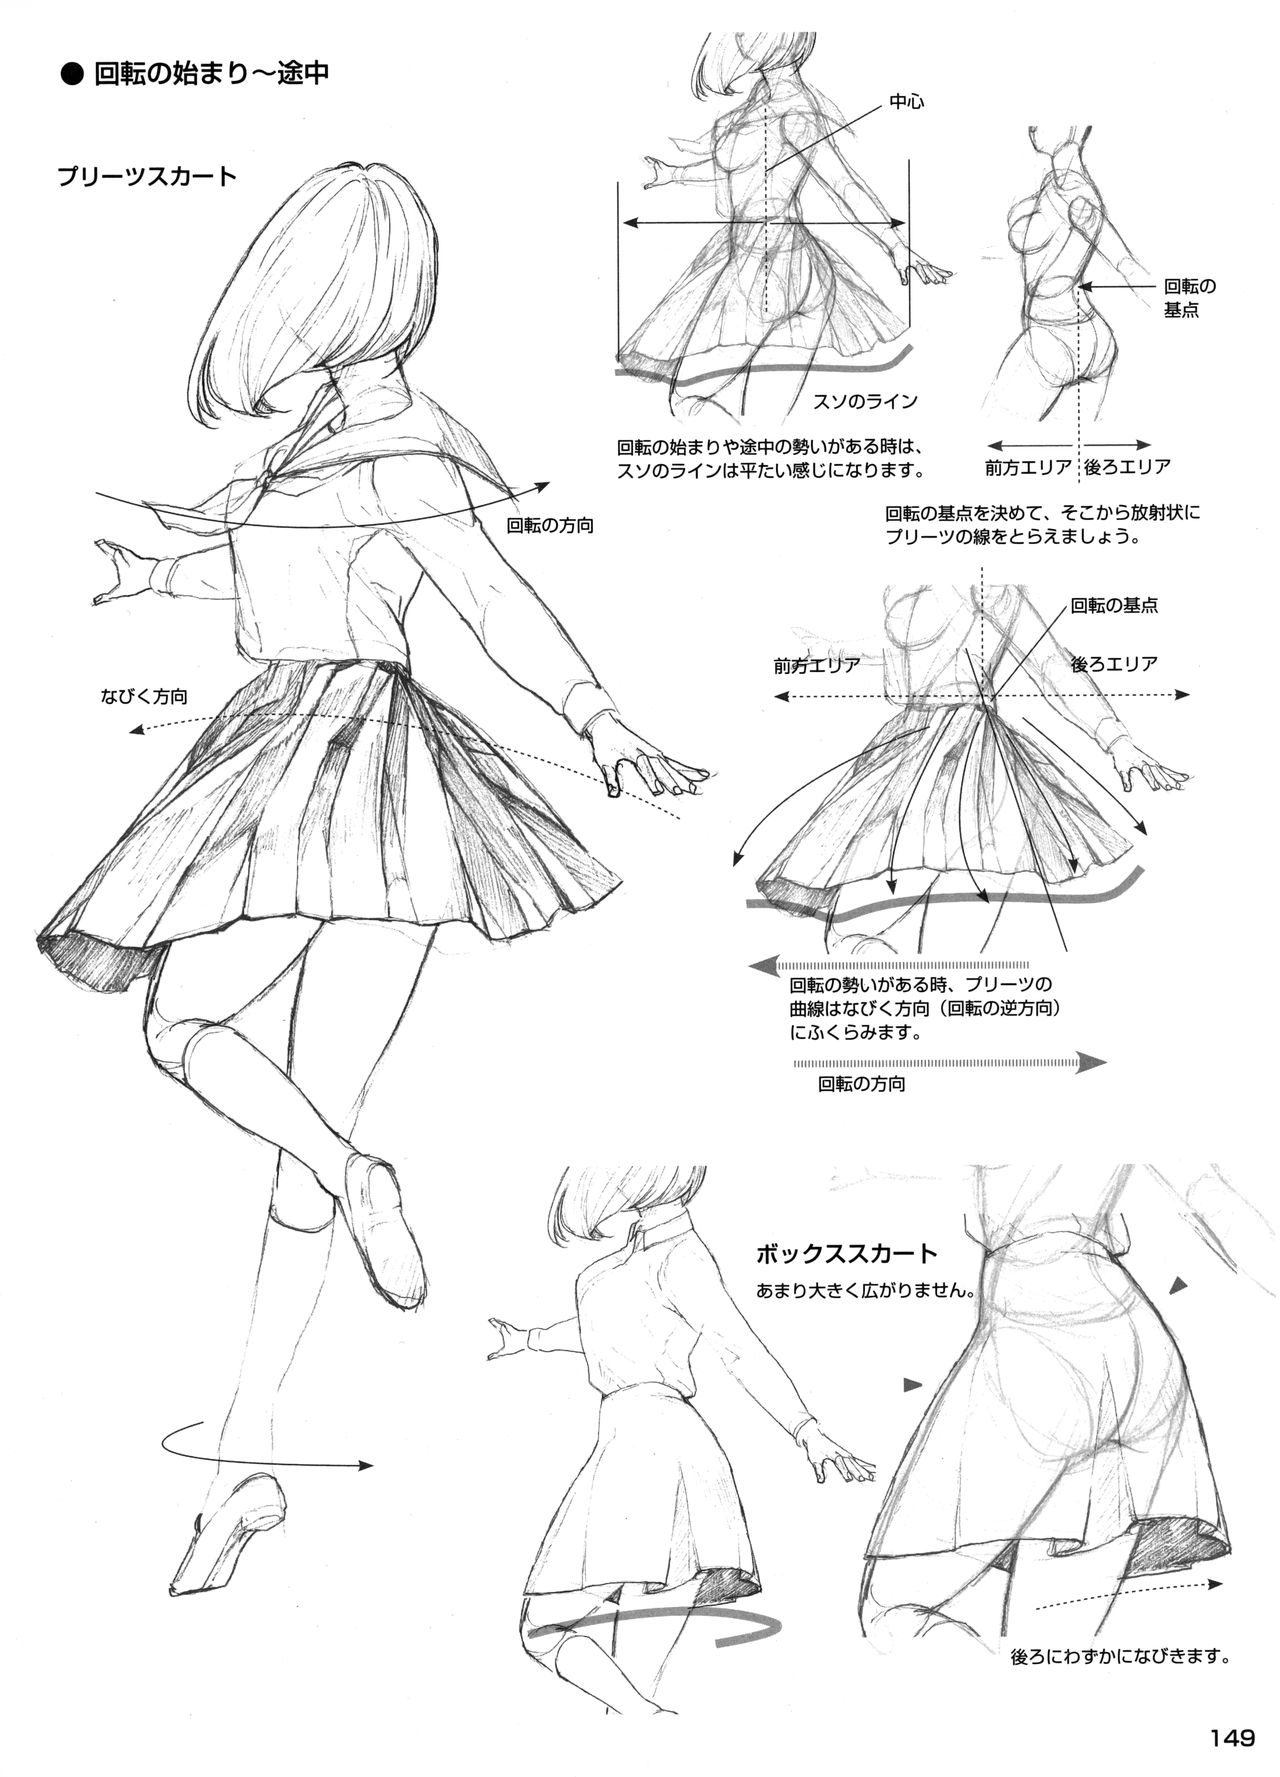 Manga no Kiso Dessin - Onnanoko Costume hen 149